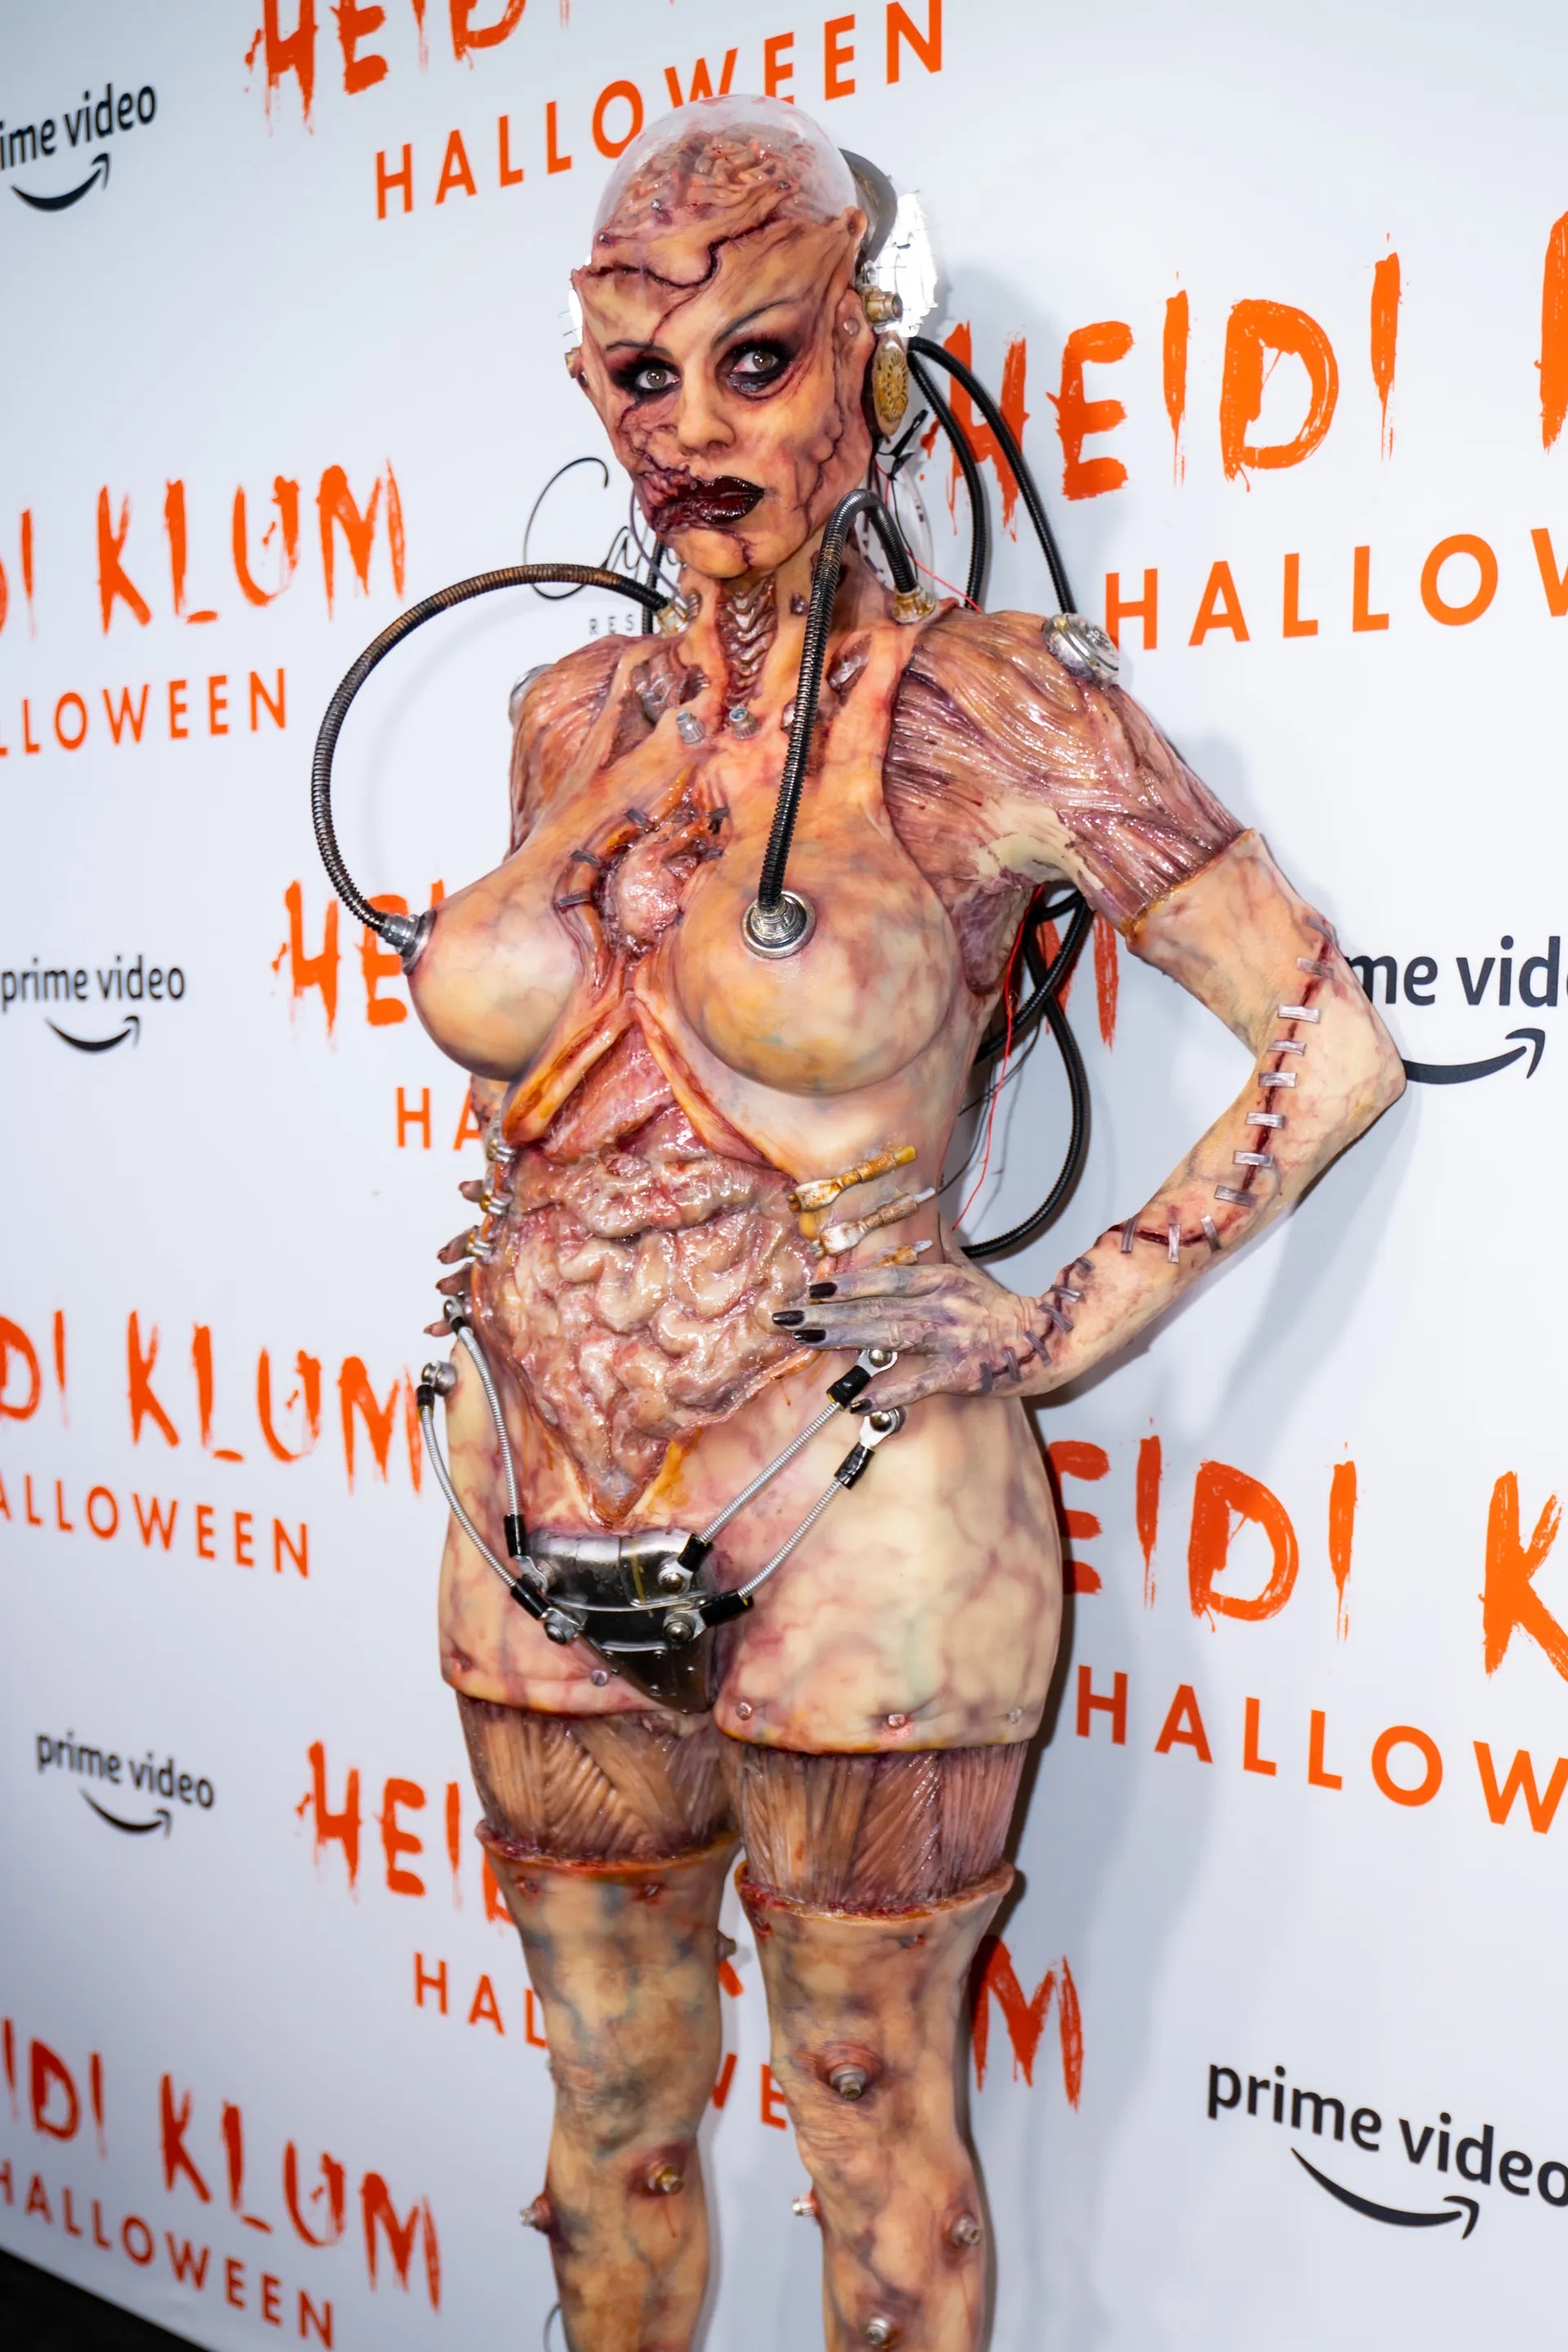 Heidi Klum Alien Experiment